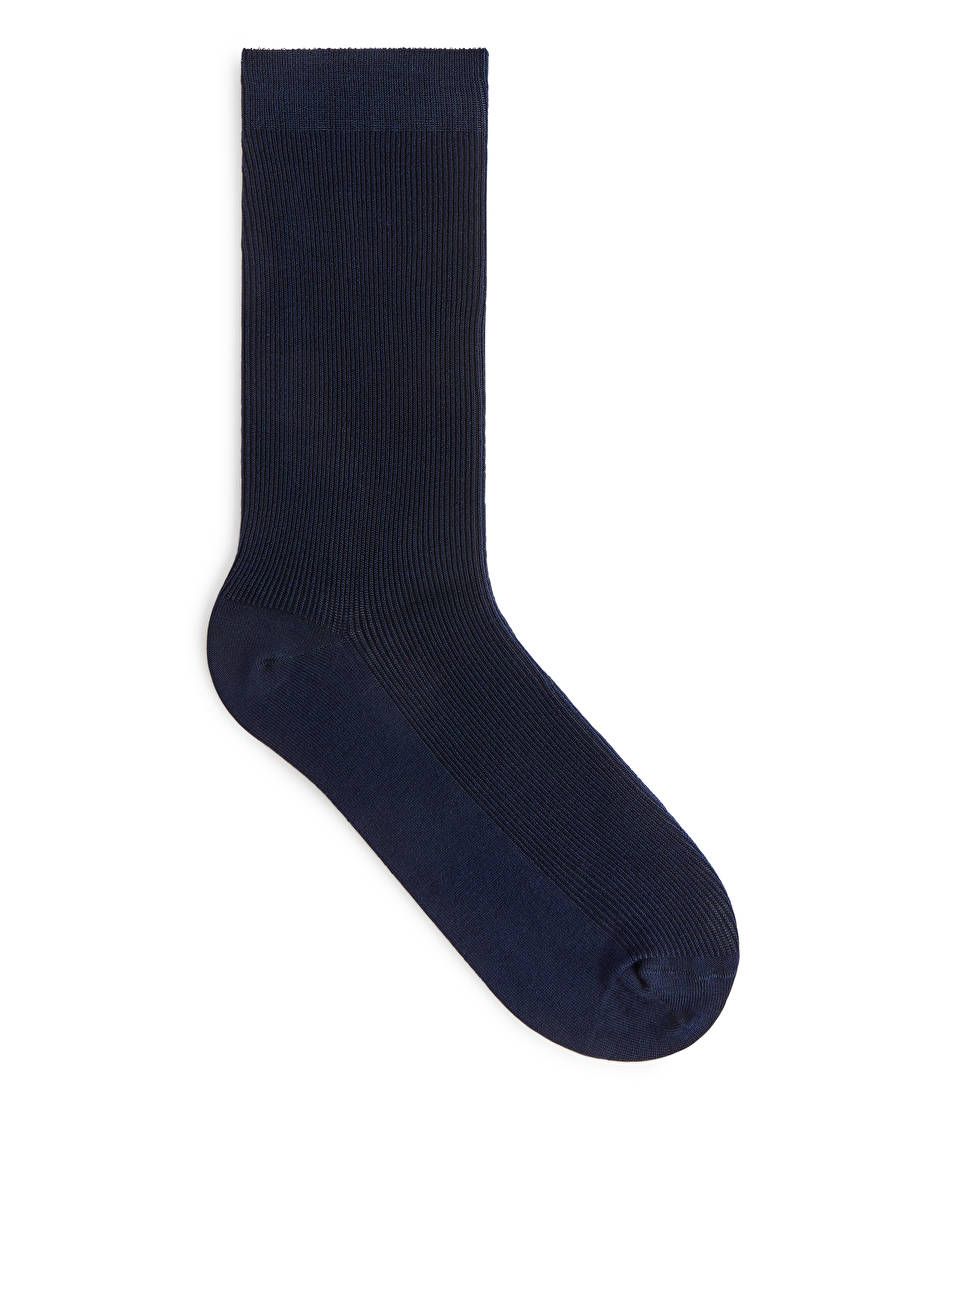 Mercerised Cotton Rib Socks - Dark Blue - Underwear & Loungewear - ARKET GB | ARKET